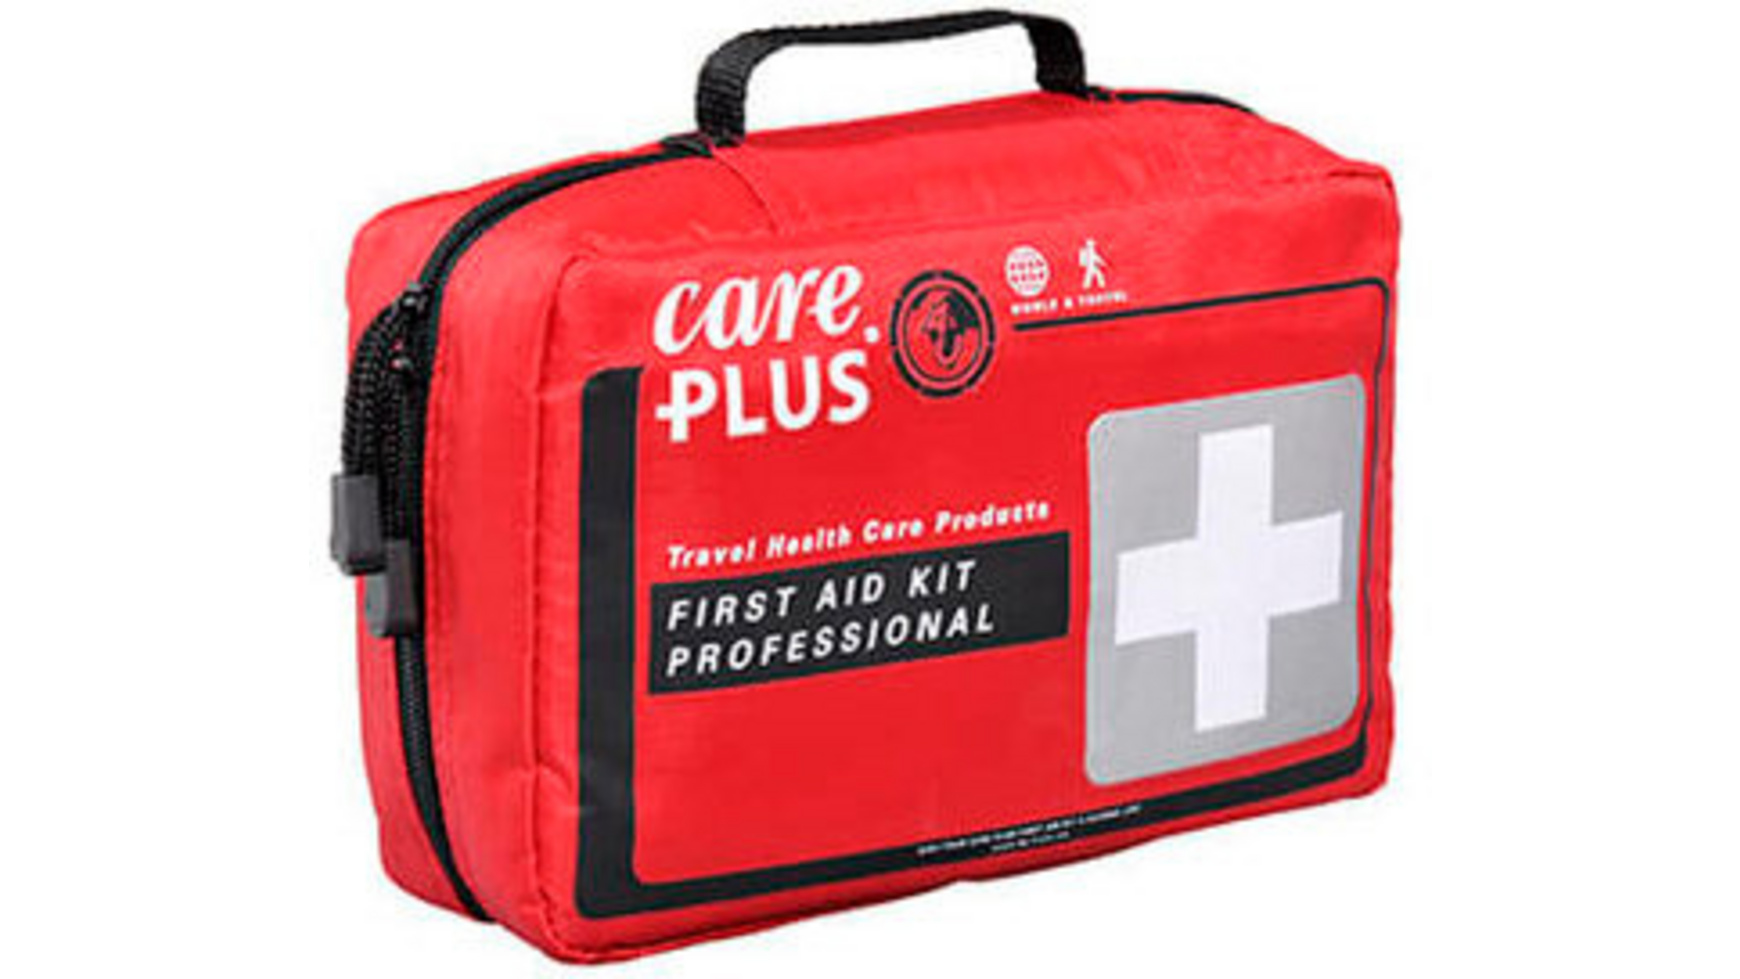 https://static.transa.ch/careplus-first-aid-kit-professional--/pdzoom/1989994.jpg